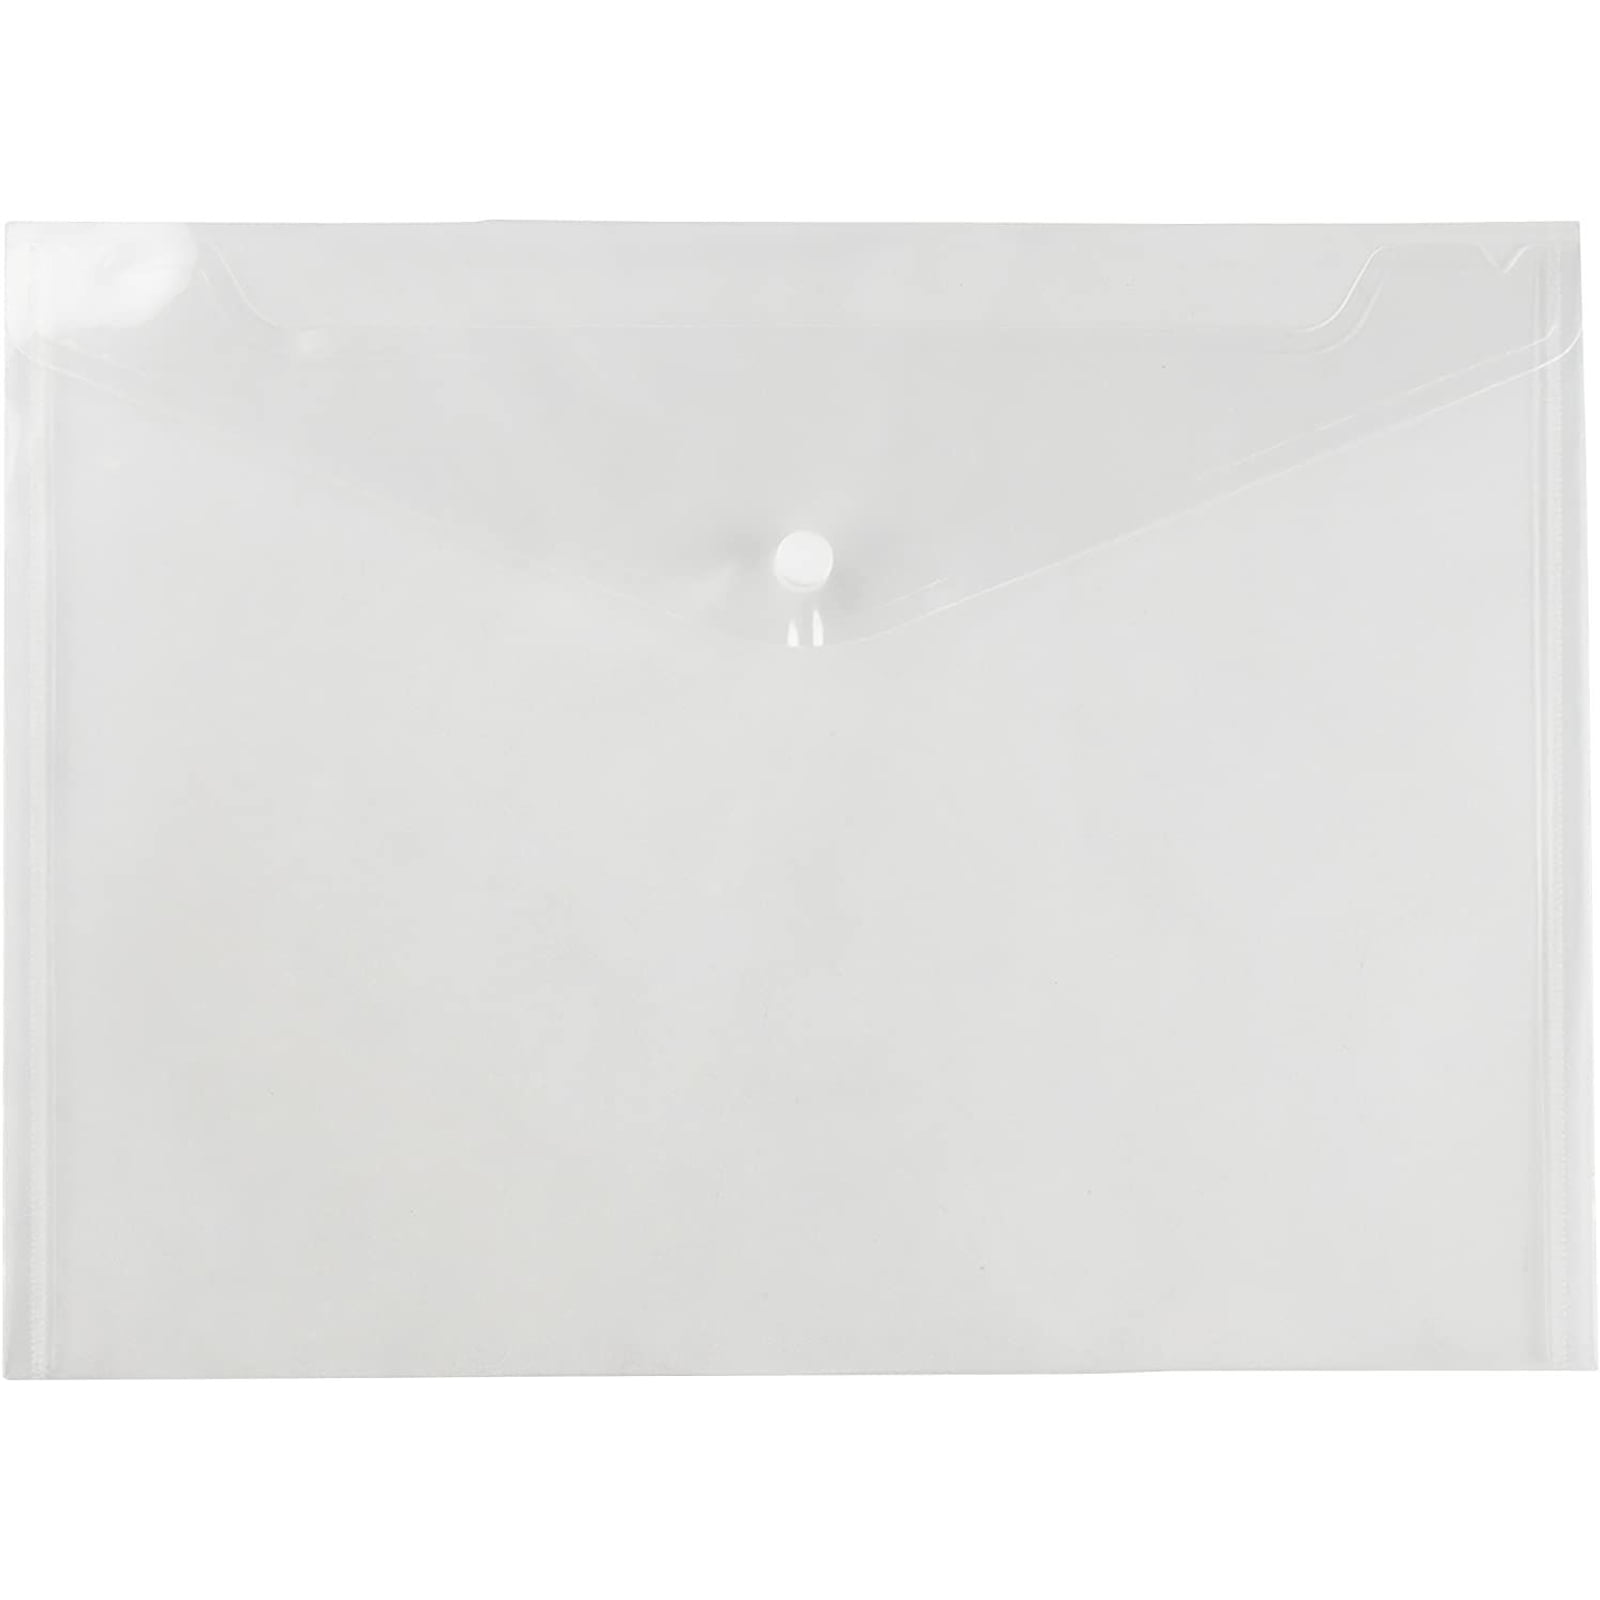 A4 Size Water/tear Resistant 5 Assorted Colors Set-translucent Document Folder With Snap Button Closure LoveS 20pcs Premium Quality Poly Envelope